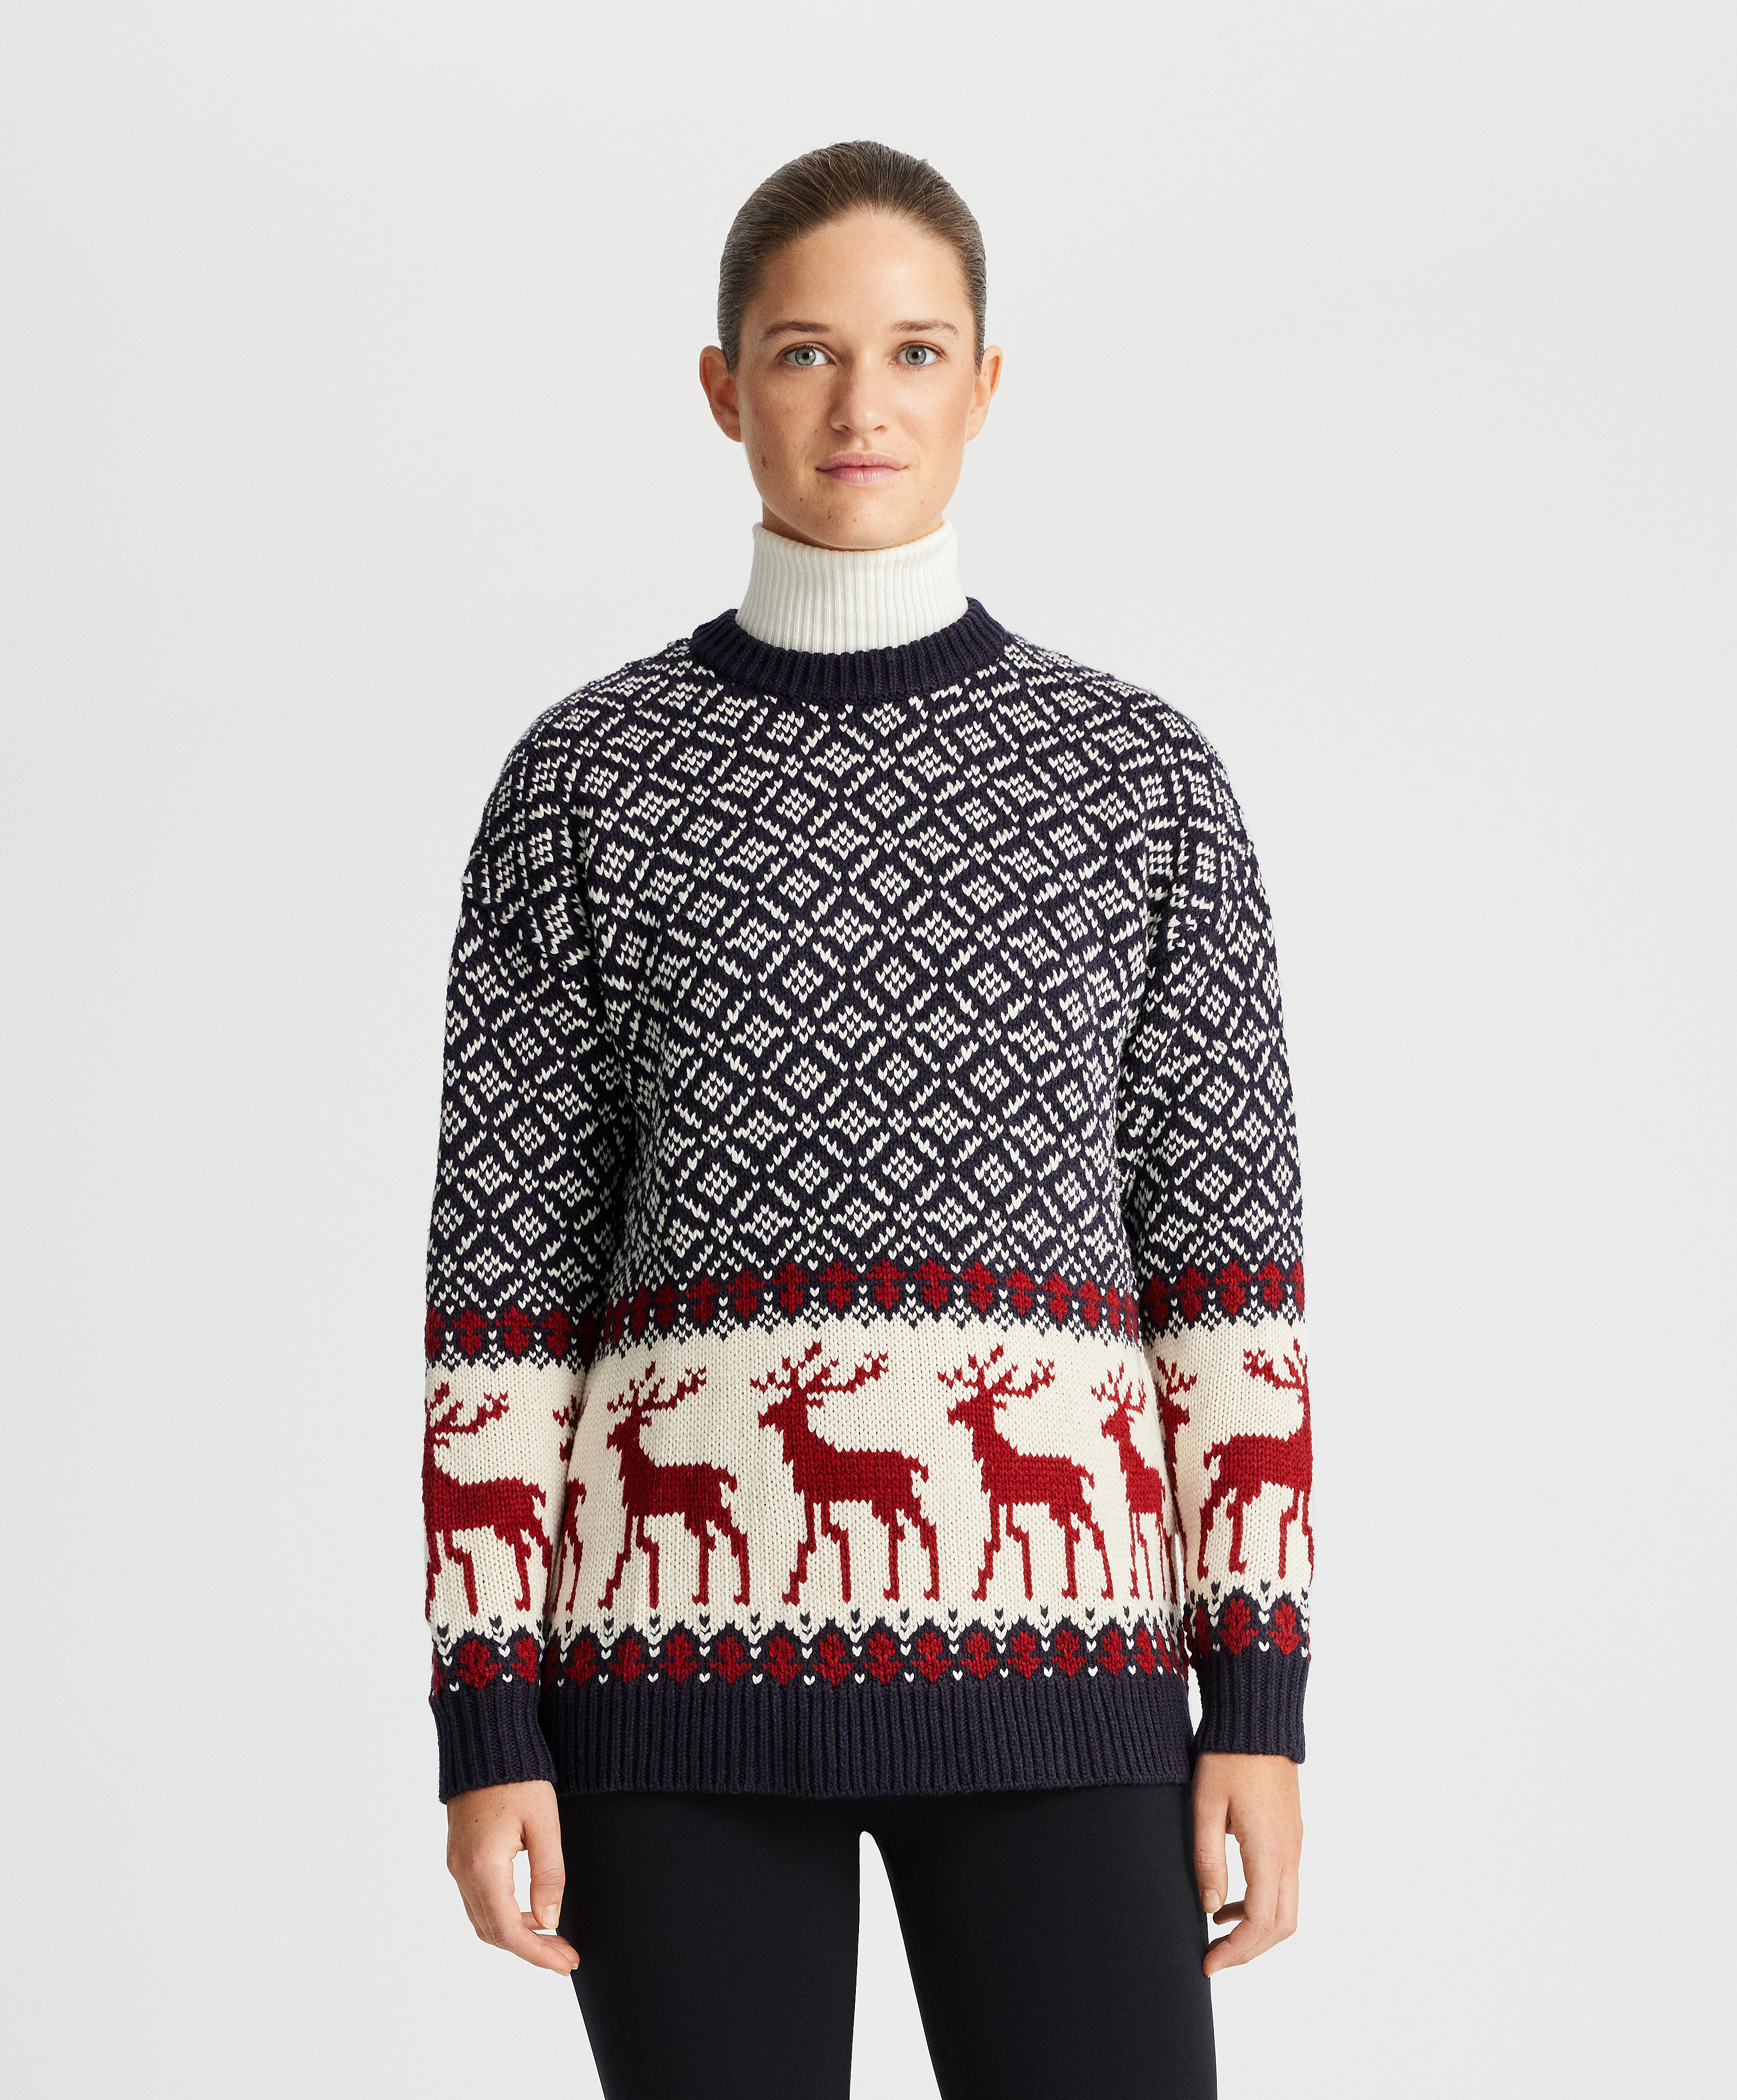 Sweater i strik med jacquard motiv med rensdyr